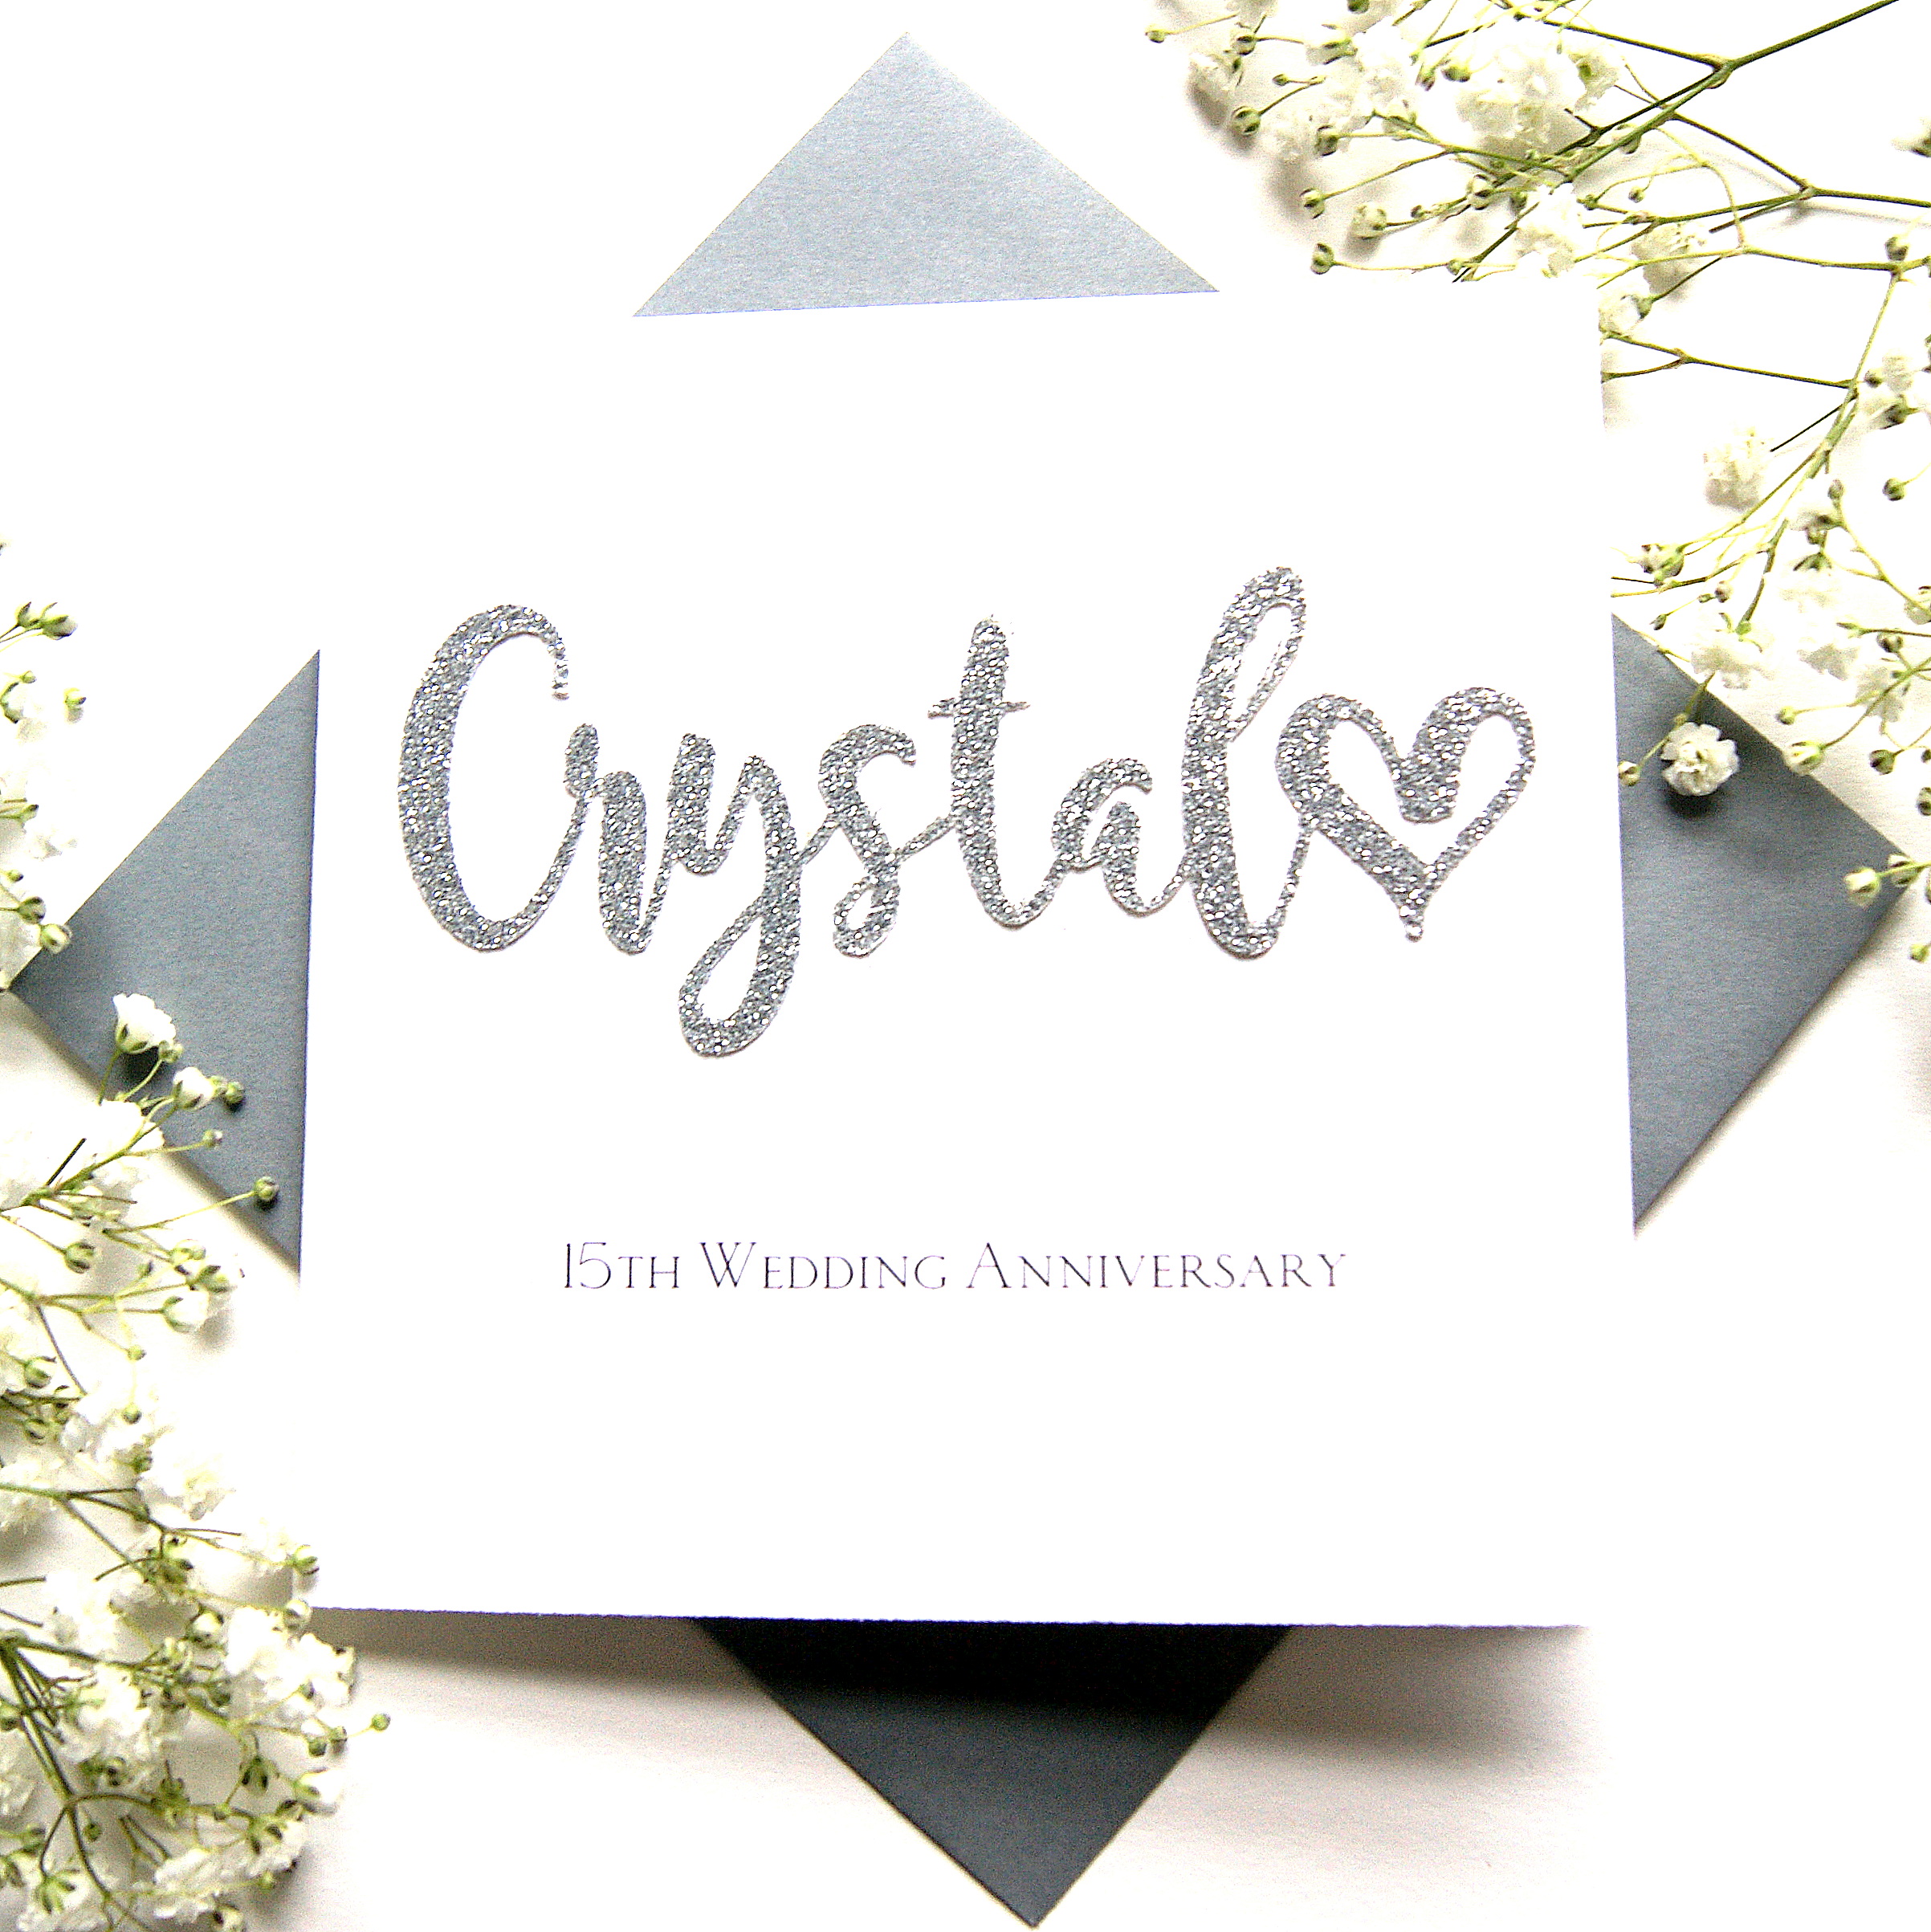 Crystal 15th Wedding Anniversary Card | Shop Online ...